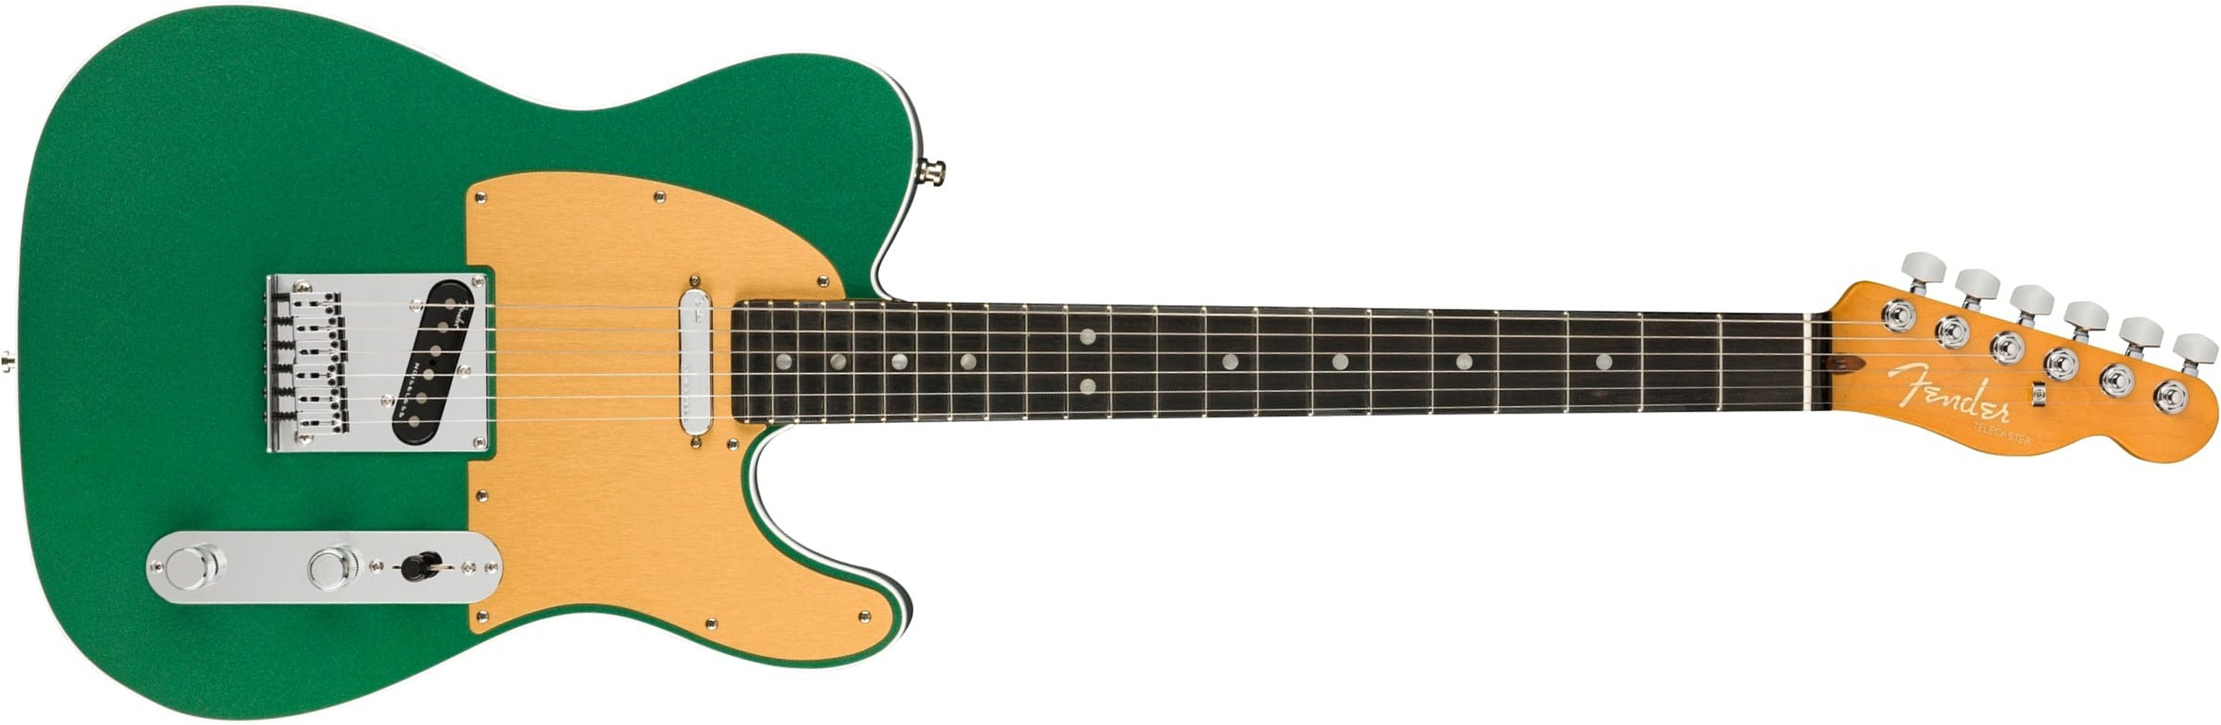 Fender Tele American Ultra Fsr Ltd Usa 2s Ht Eb - Mystic Pine Green - Tel shape electric guitar - Main picture